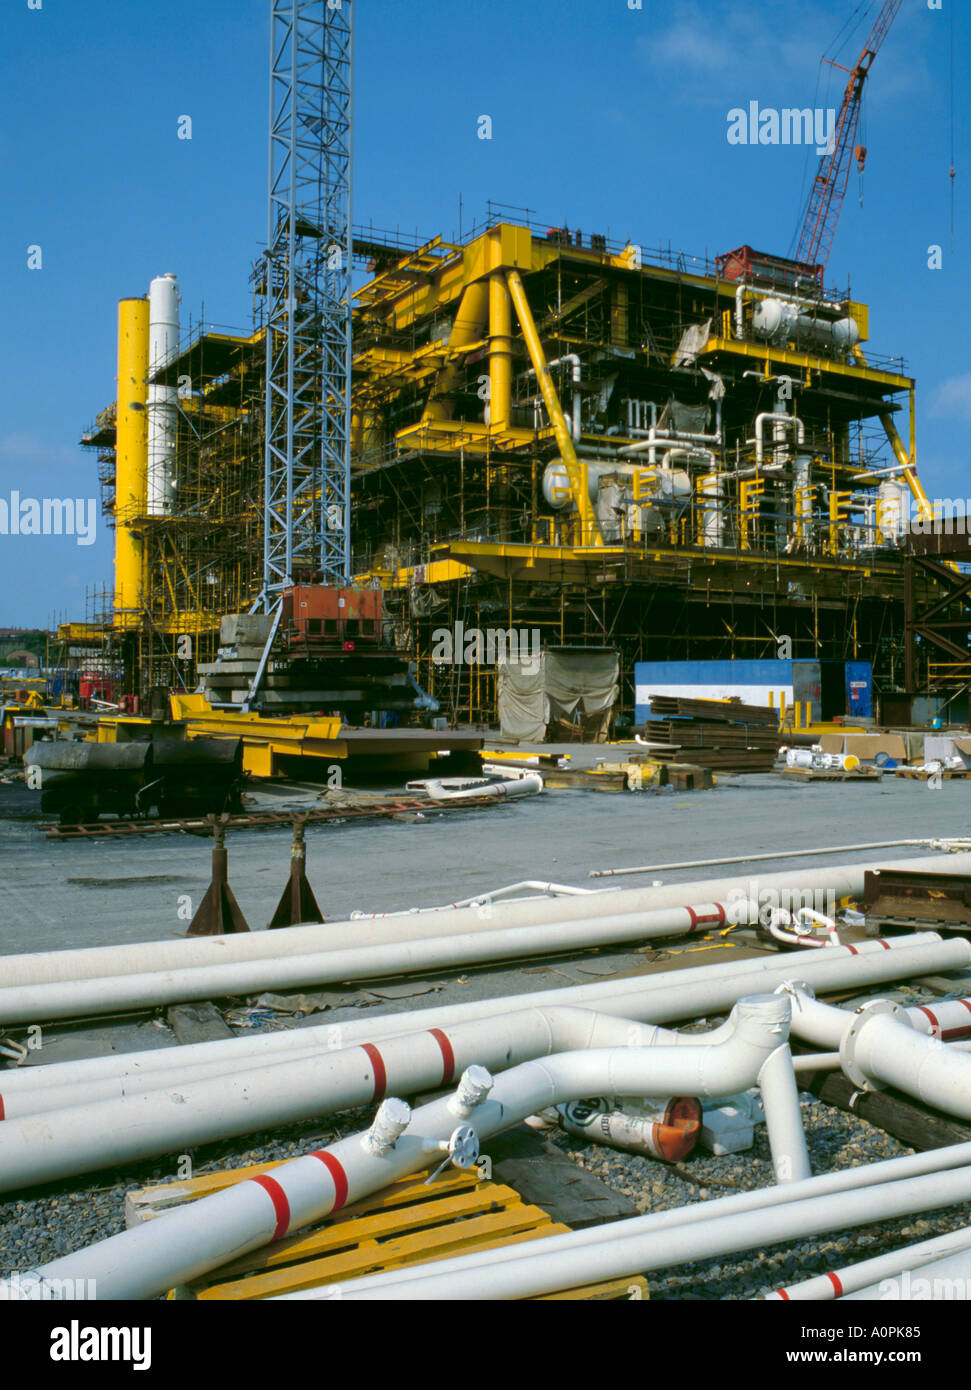 North Sea oil rig construction, Wallsend, Tyneside, Tyne and Wear, England, UK. Stock Photo